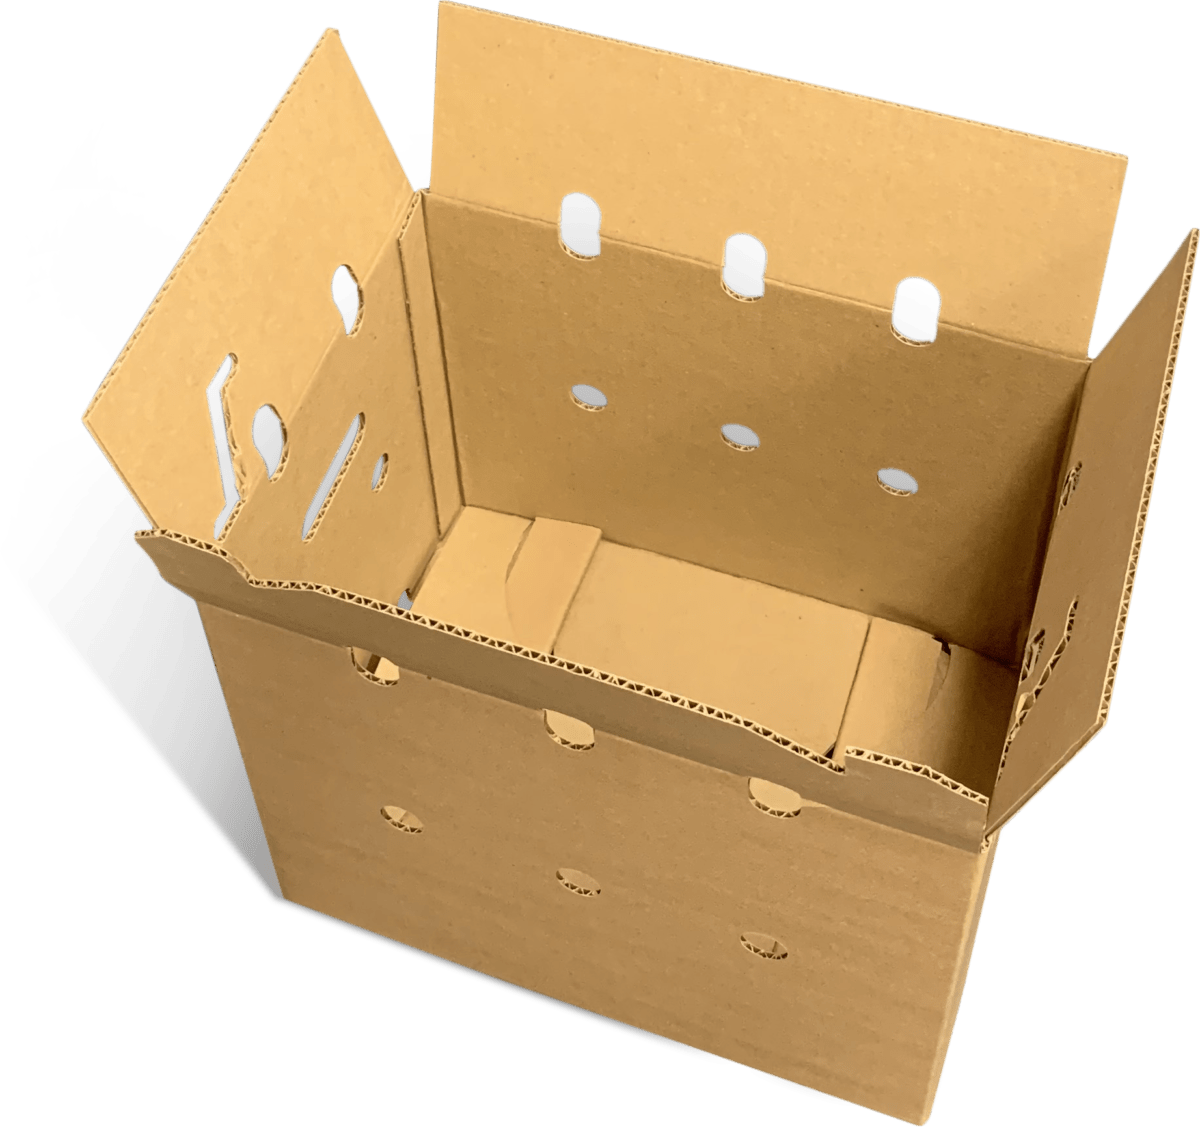 One bushel box